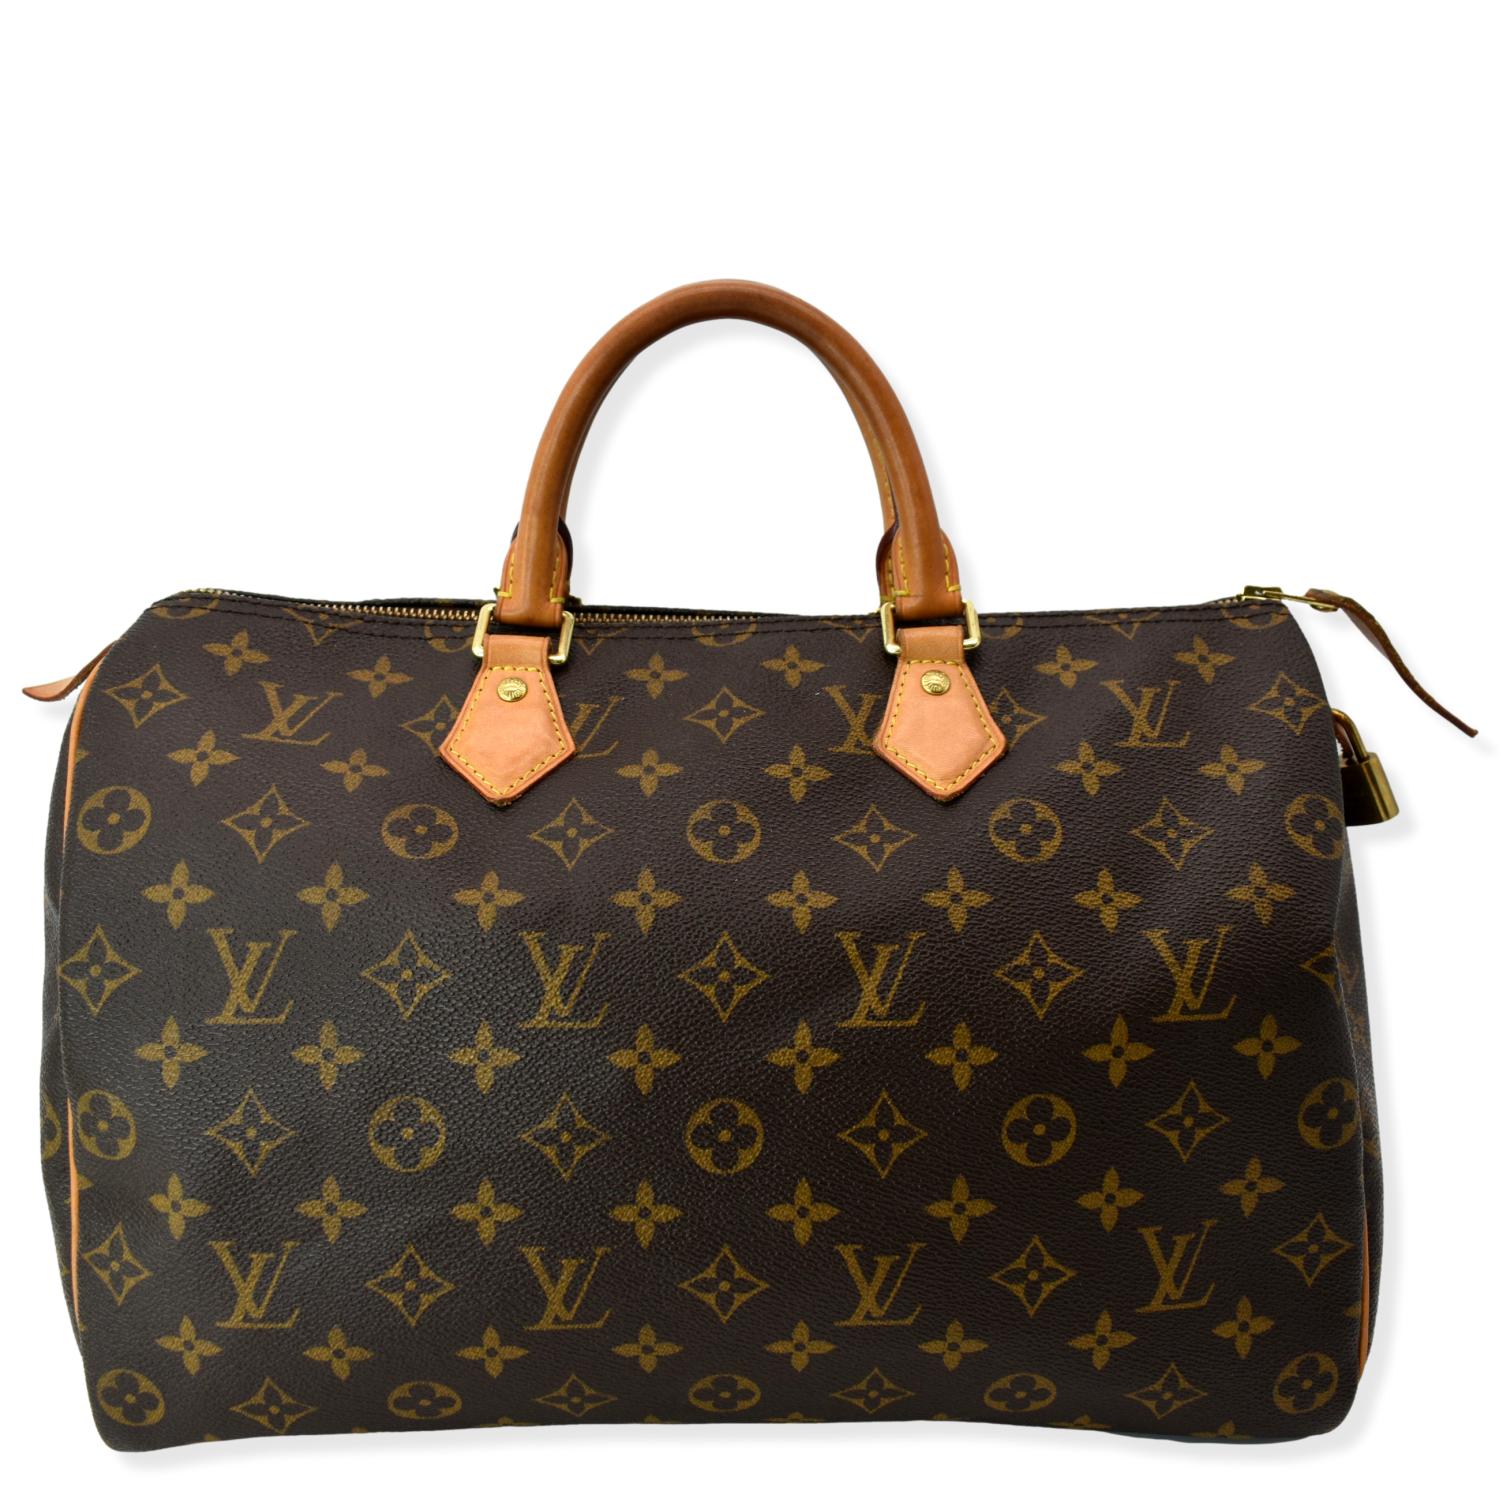 Louis-Vuitton Handbag Monogram Speedy 35 USA Limited Edition Authentic